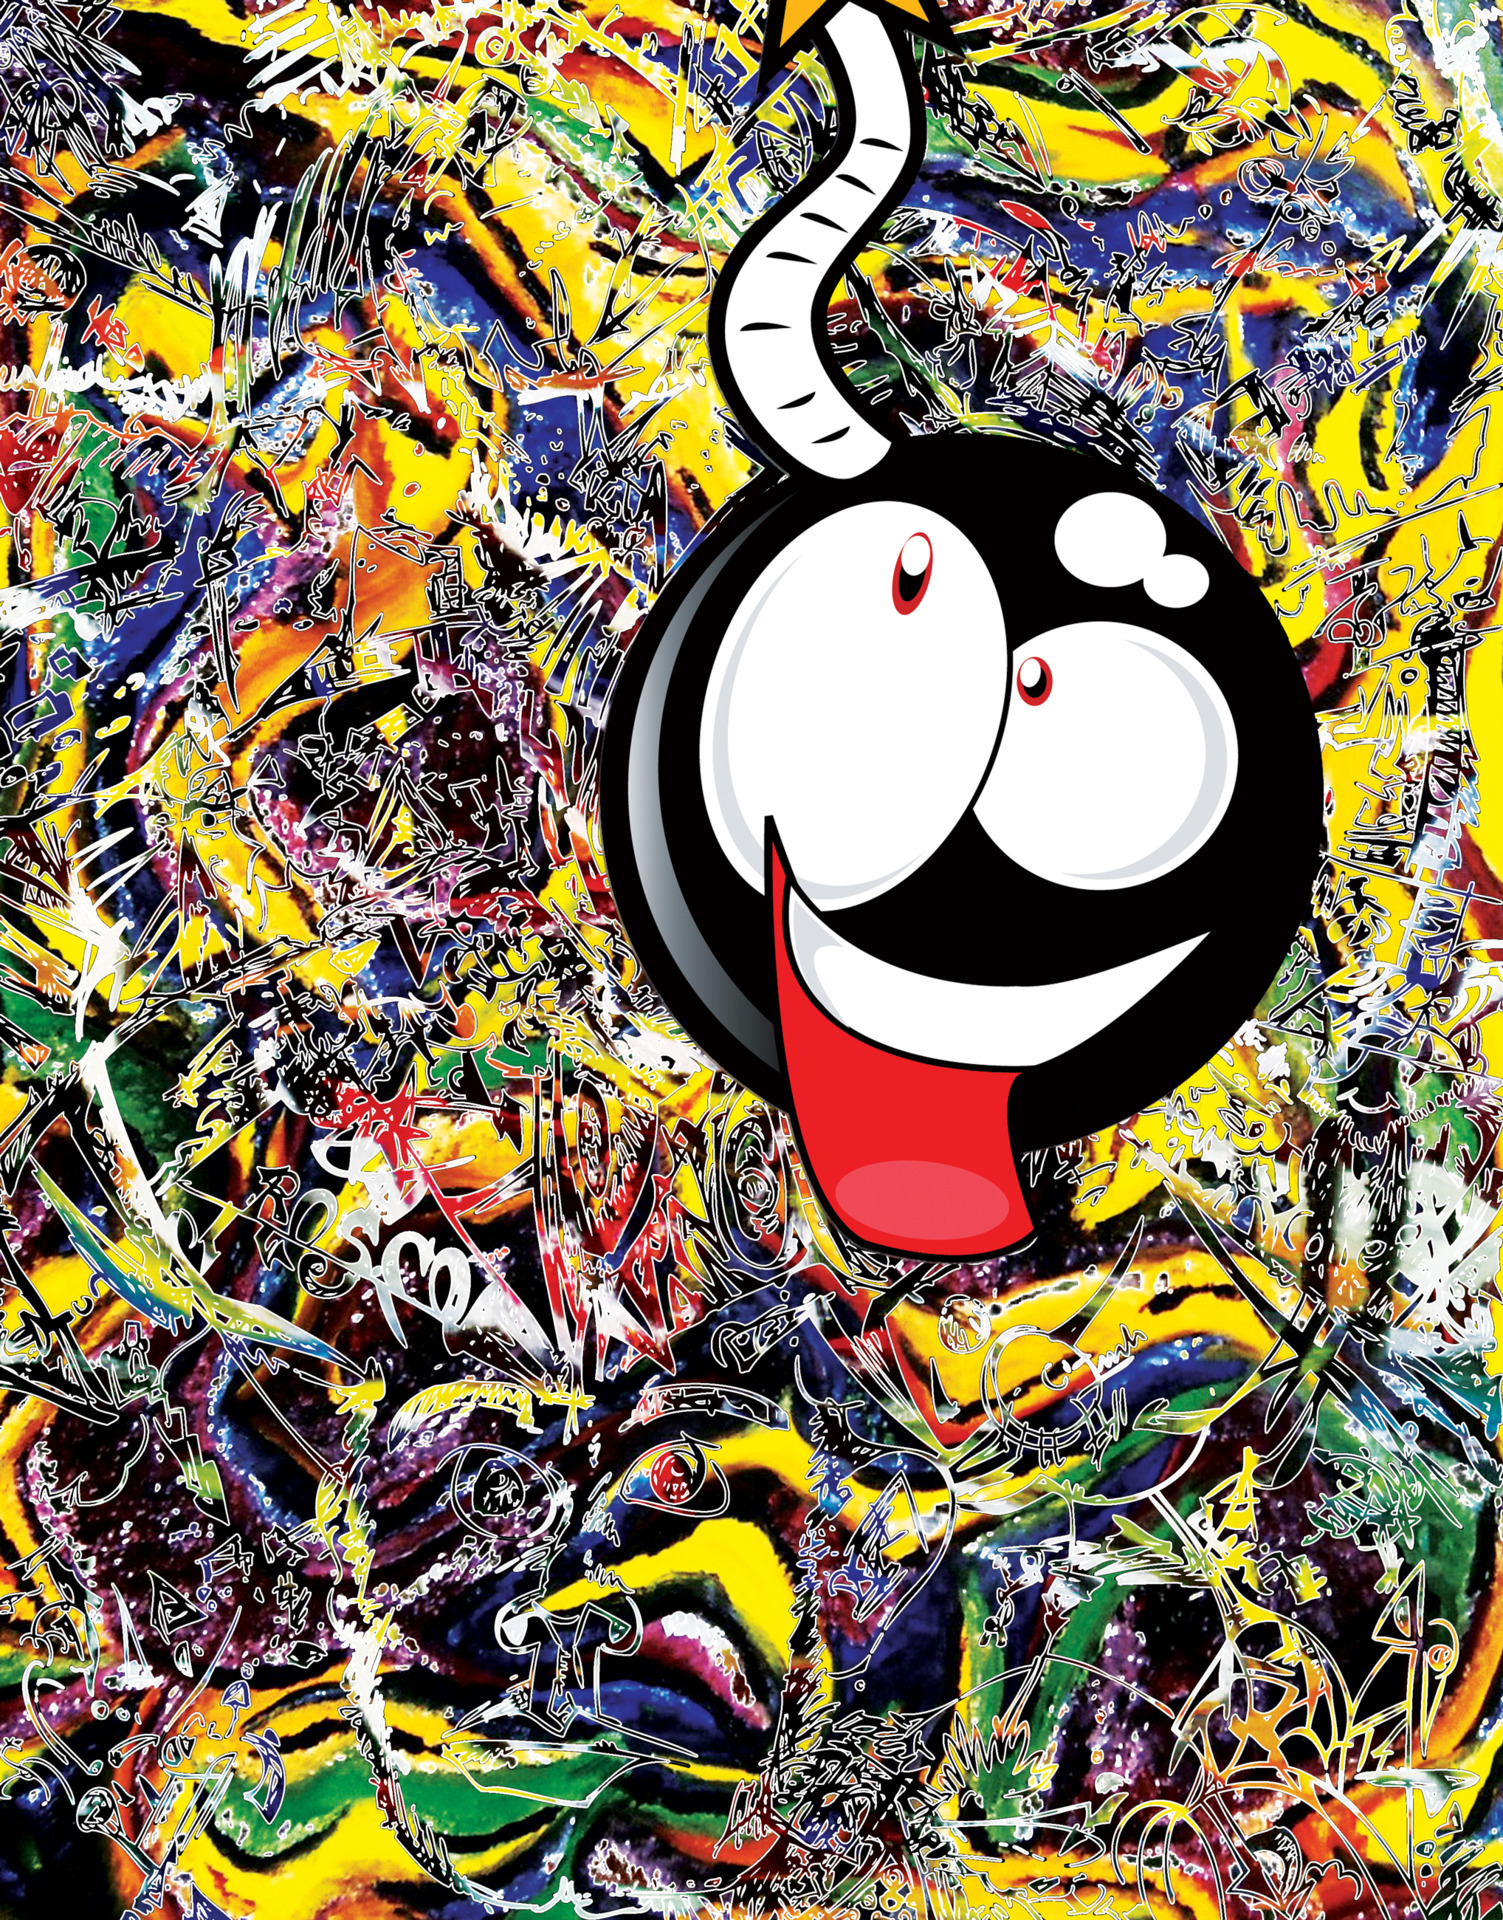 Special Thanks Go to @pimblycharles (aka Jackson Pollock Jr.)